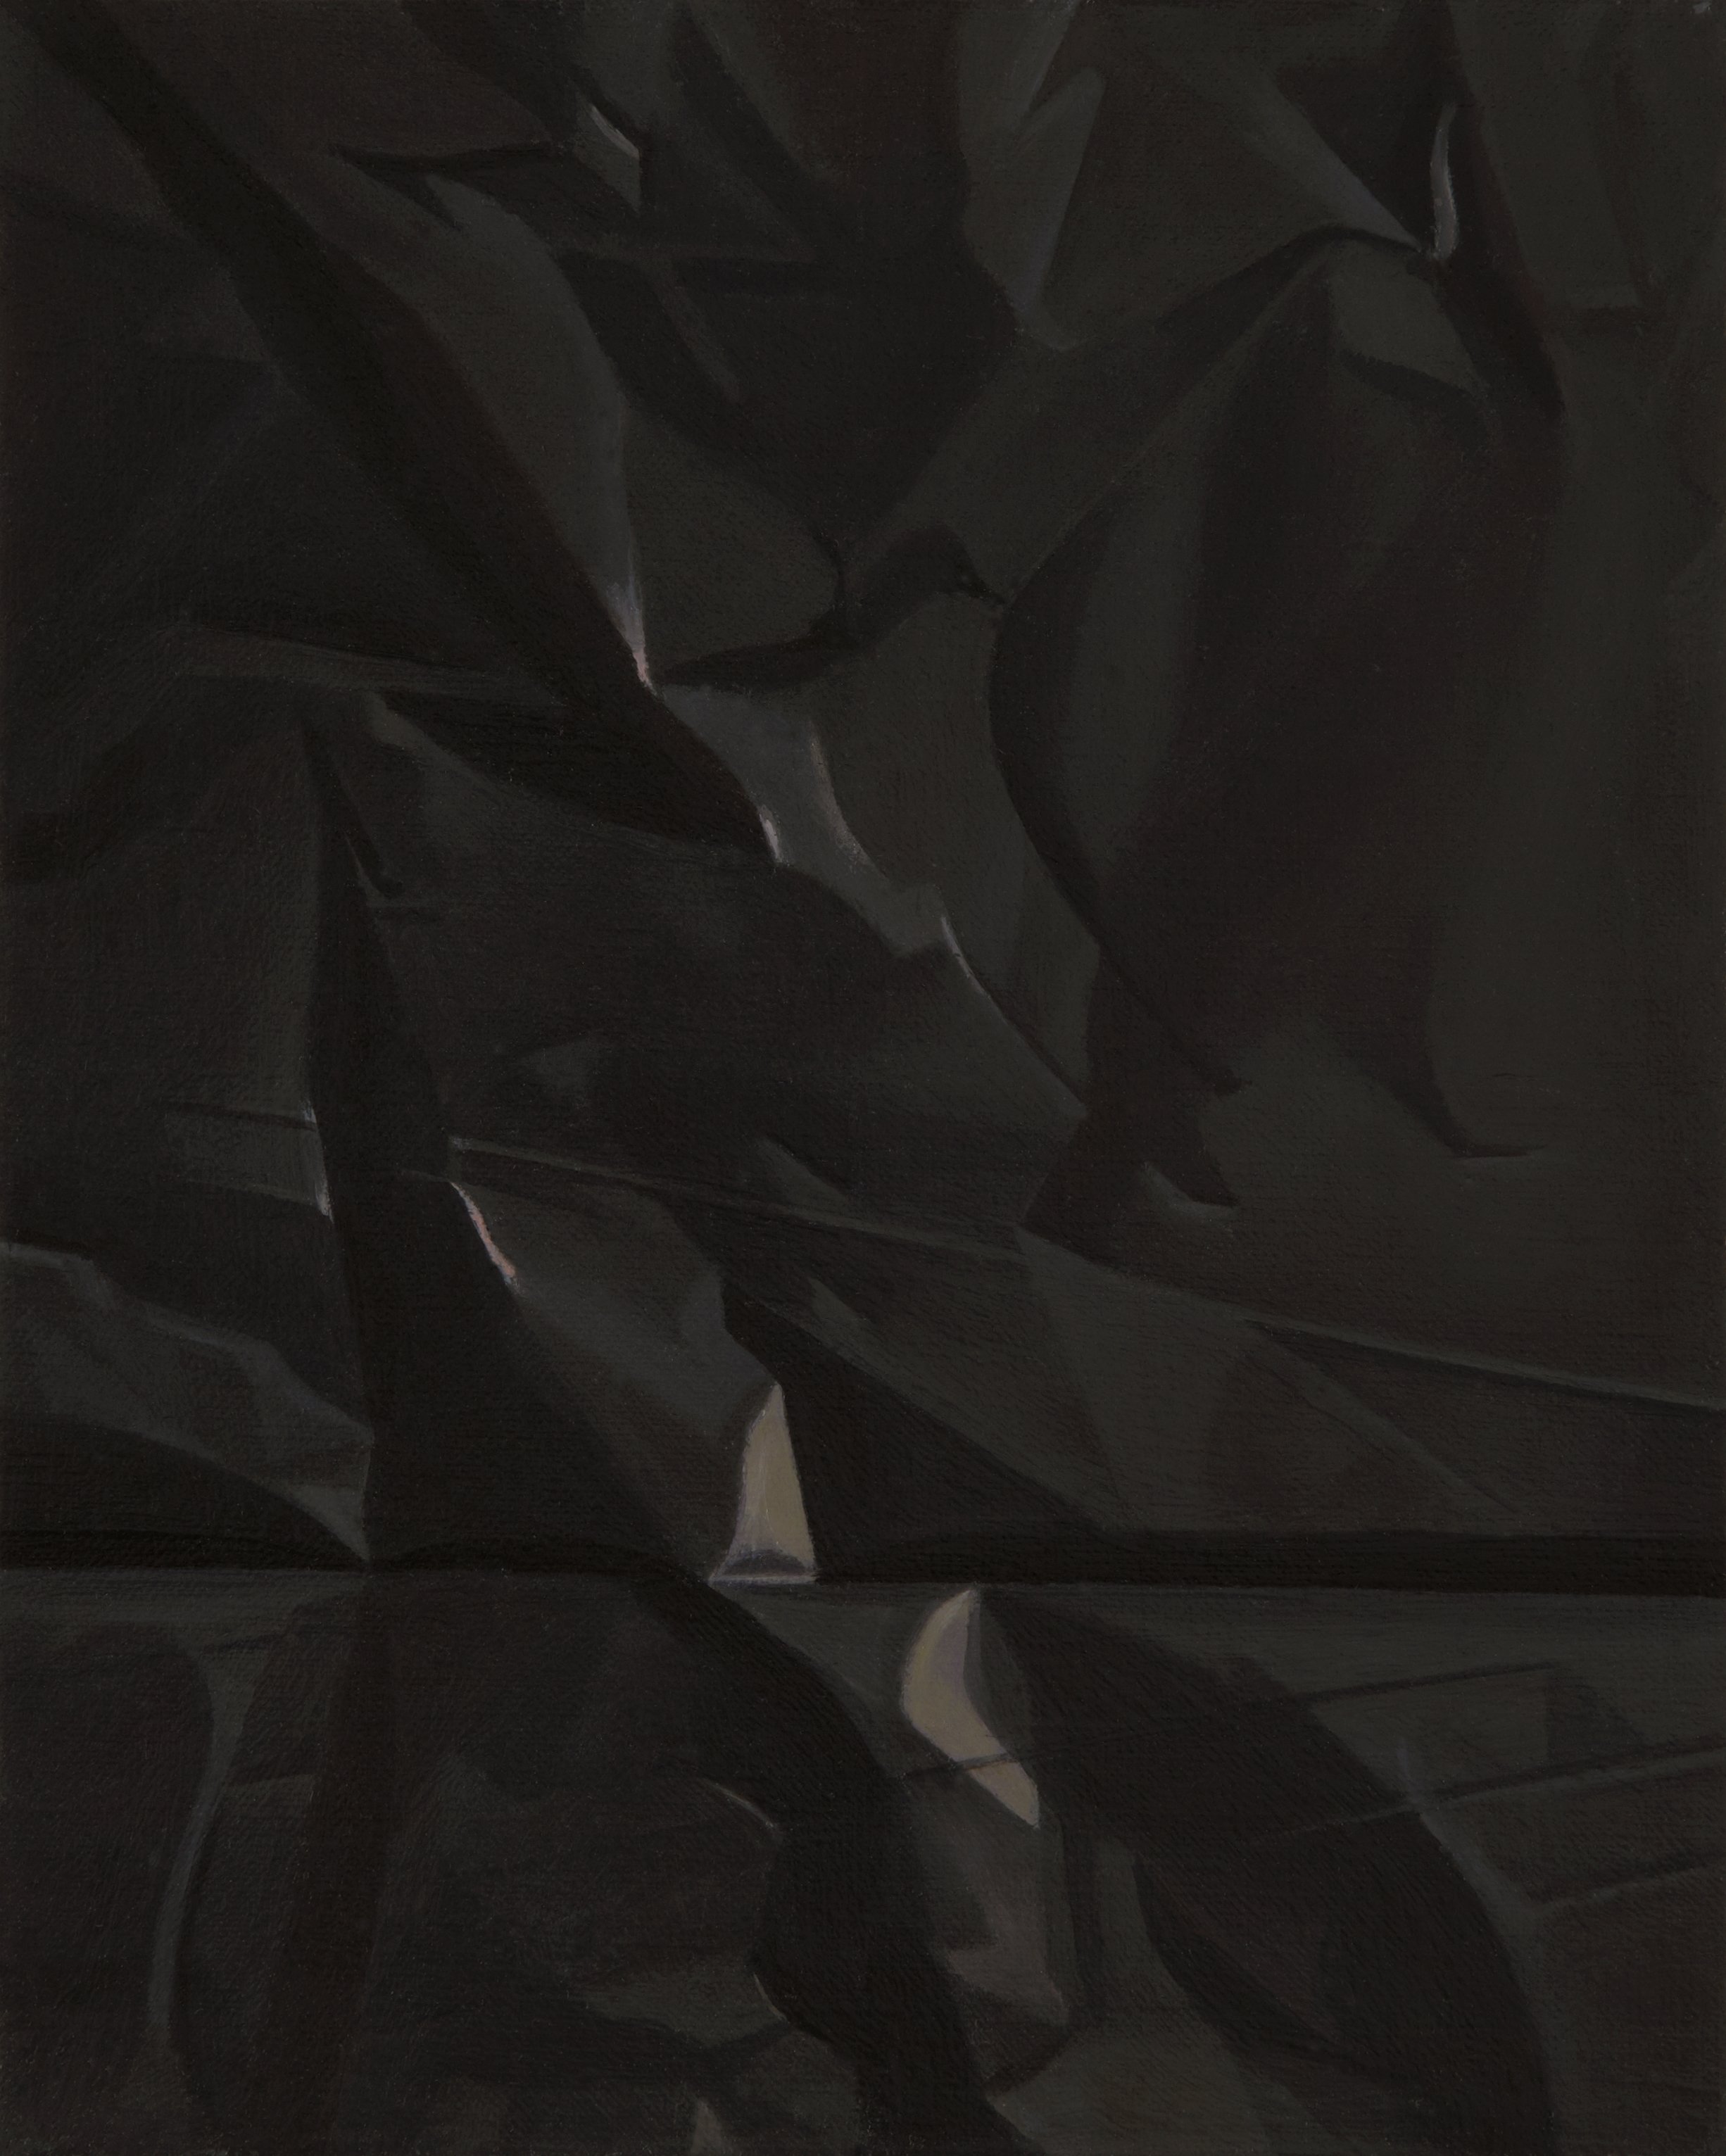  Plastic 2  8x10”, oil on canvas, 2014   